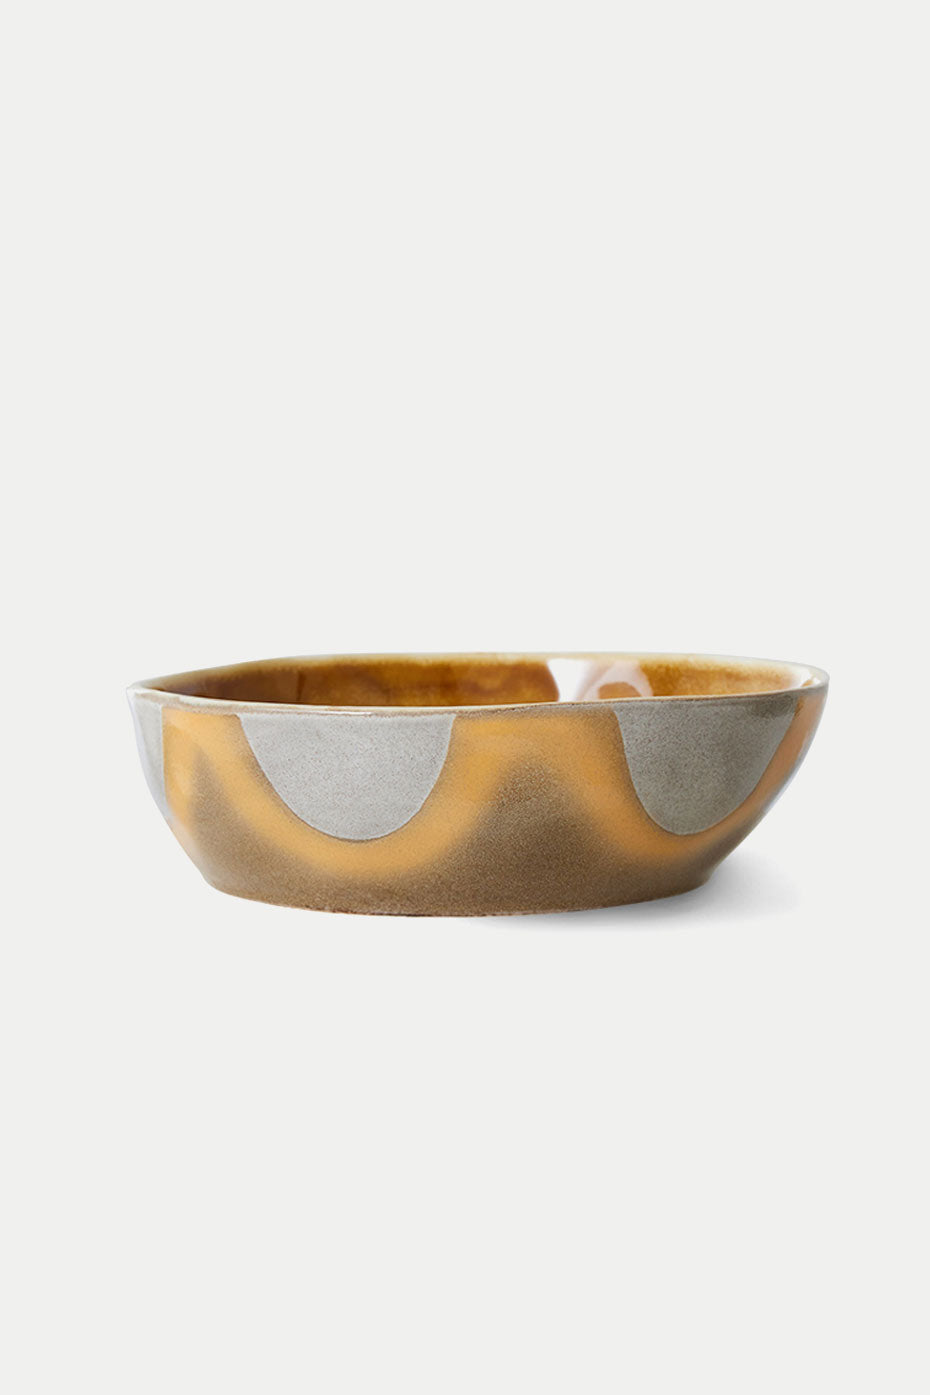 HK Living Oasis 70s Ceramics Pasta Bowls